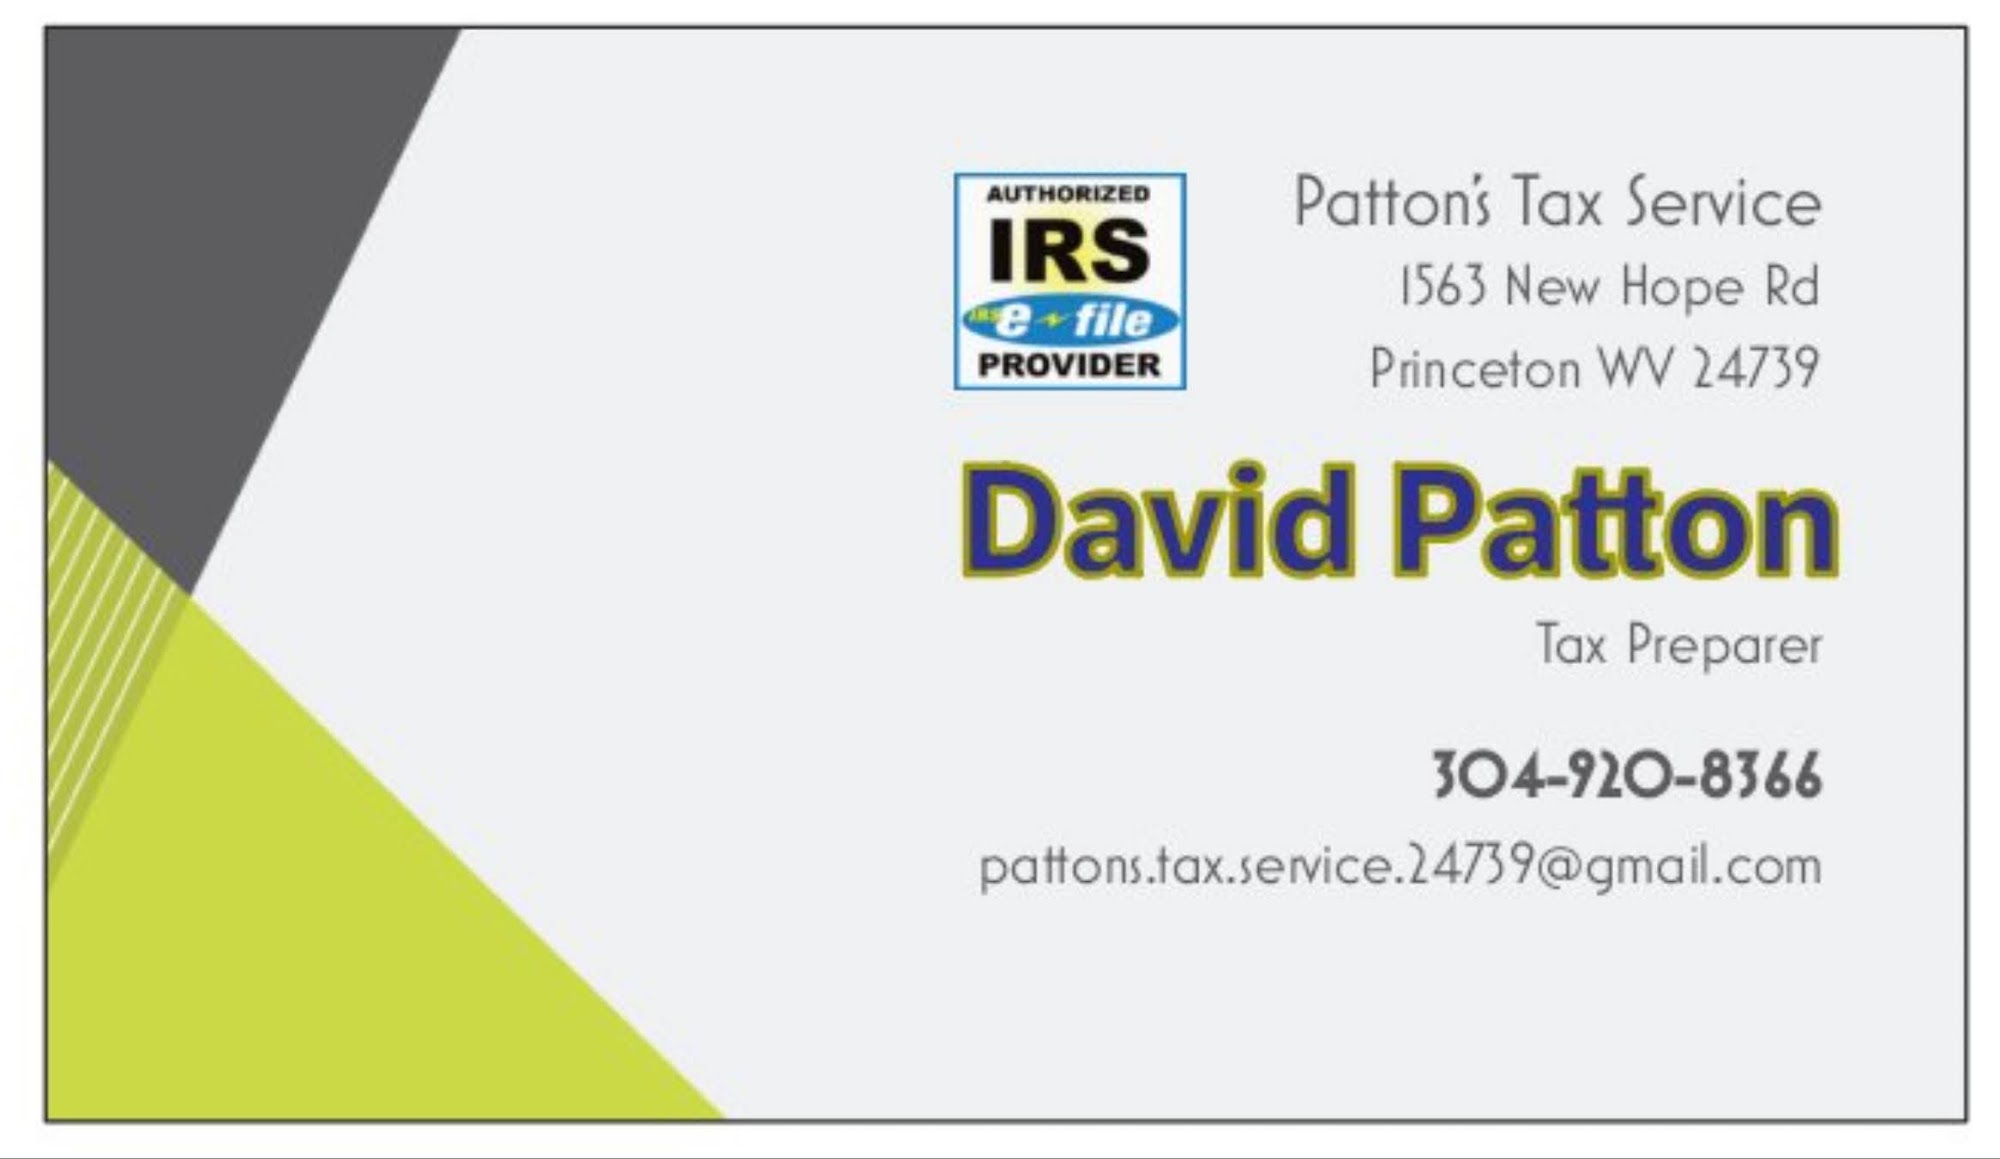 Patton's Tax Service